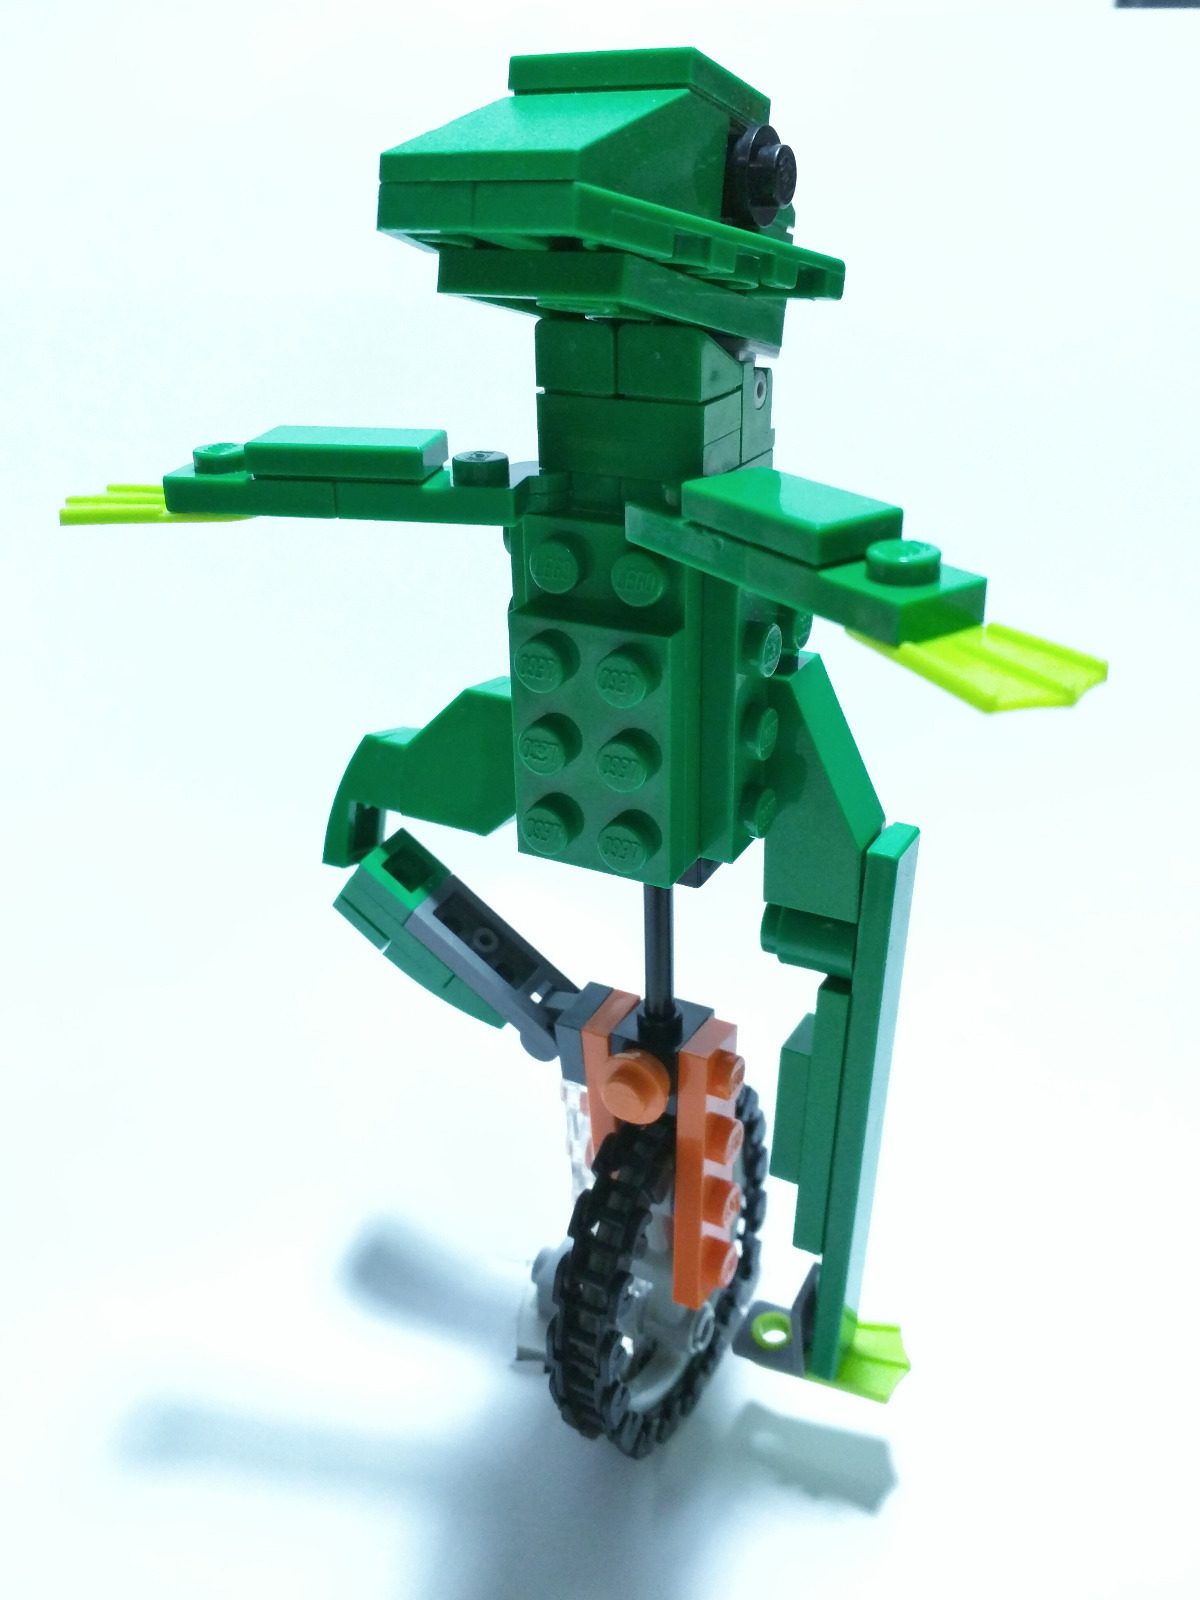 Lego boi - meme